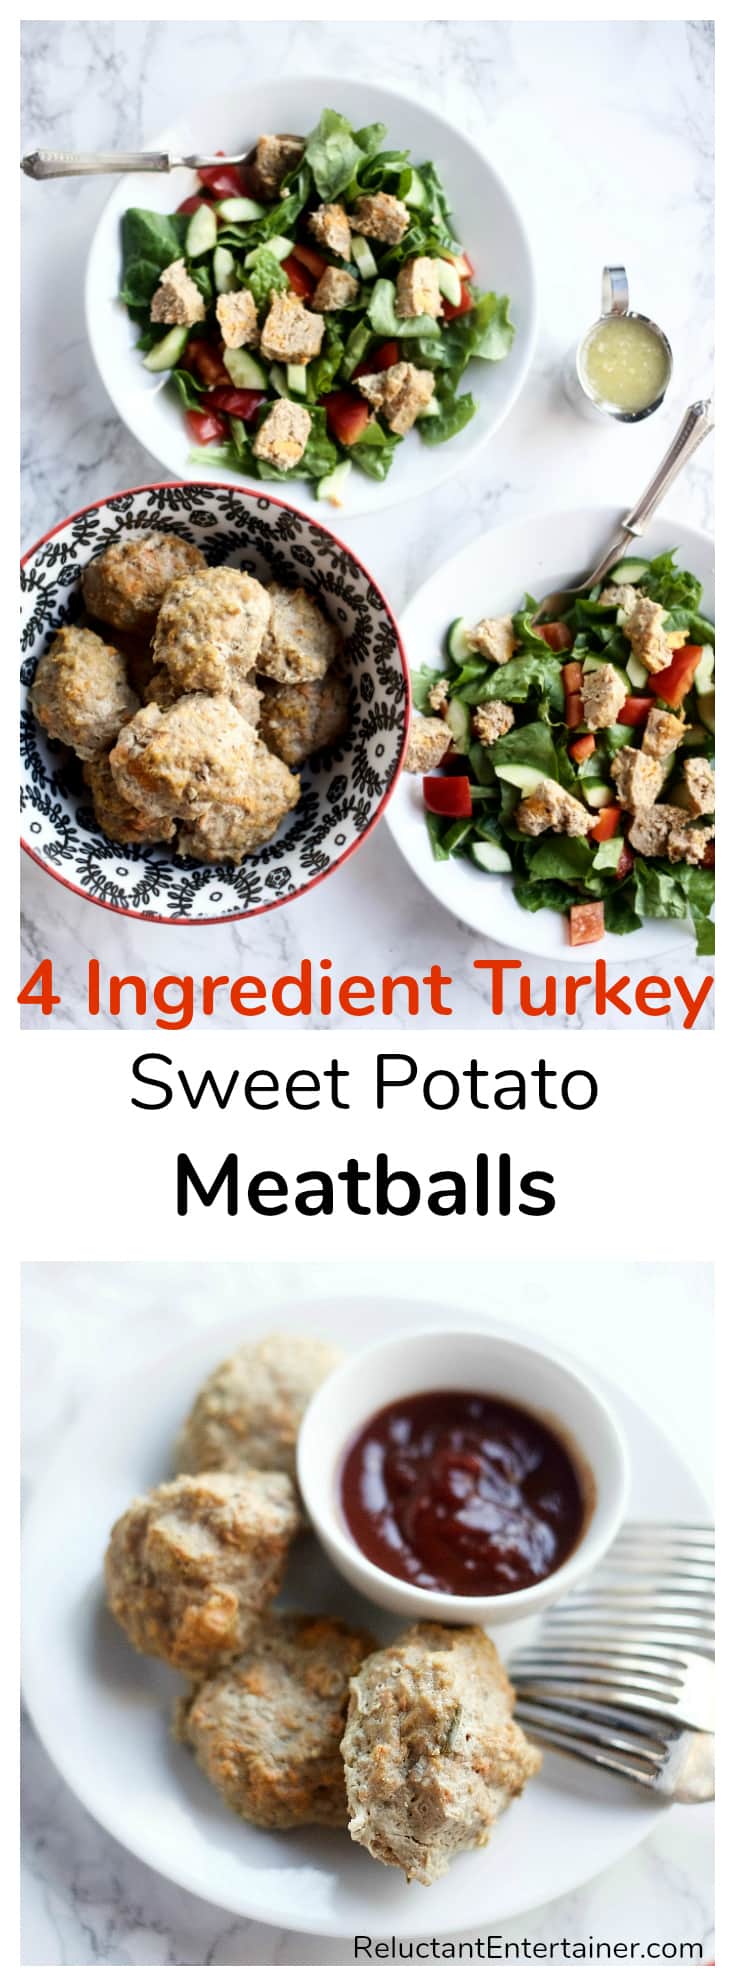 4 Ingredient Turkey Sweet Potato Meatballs